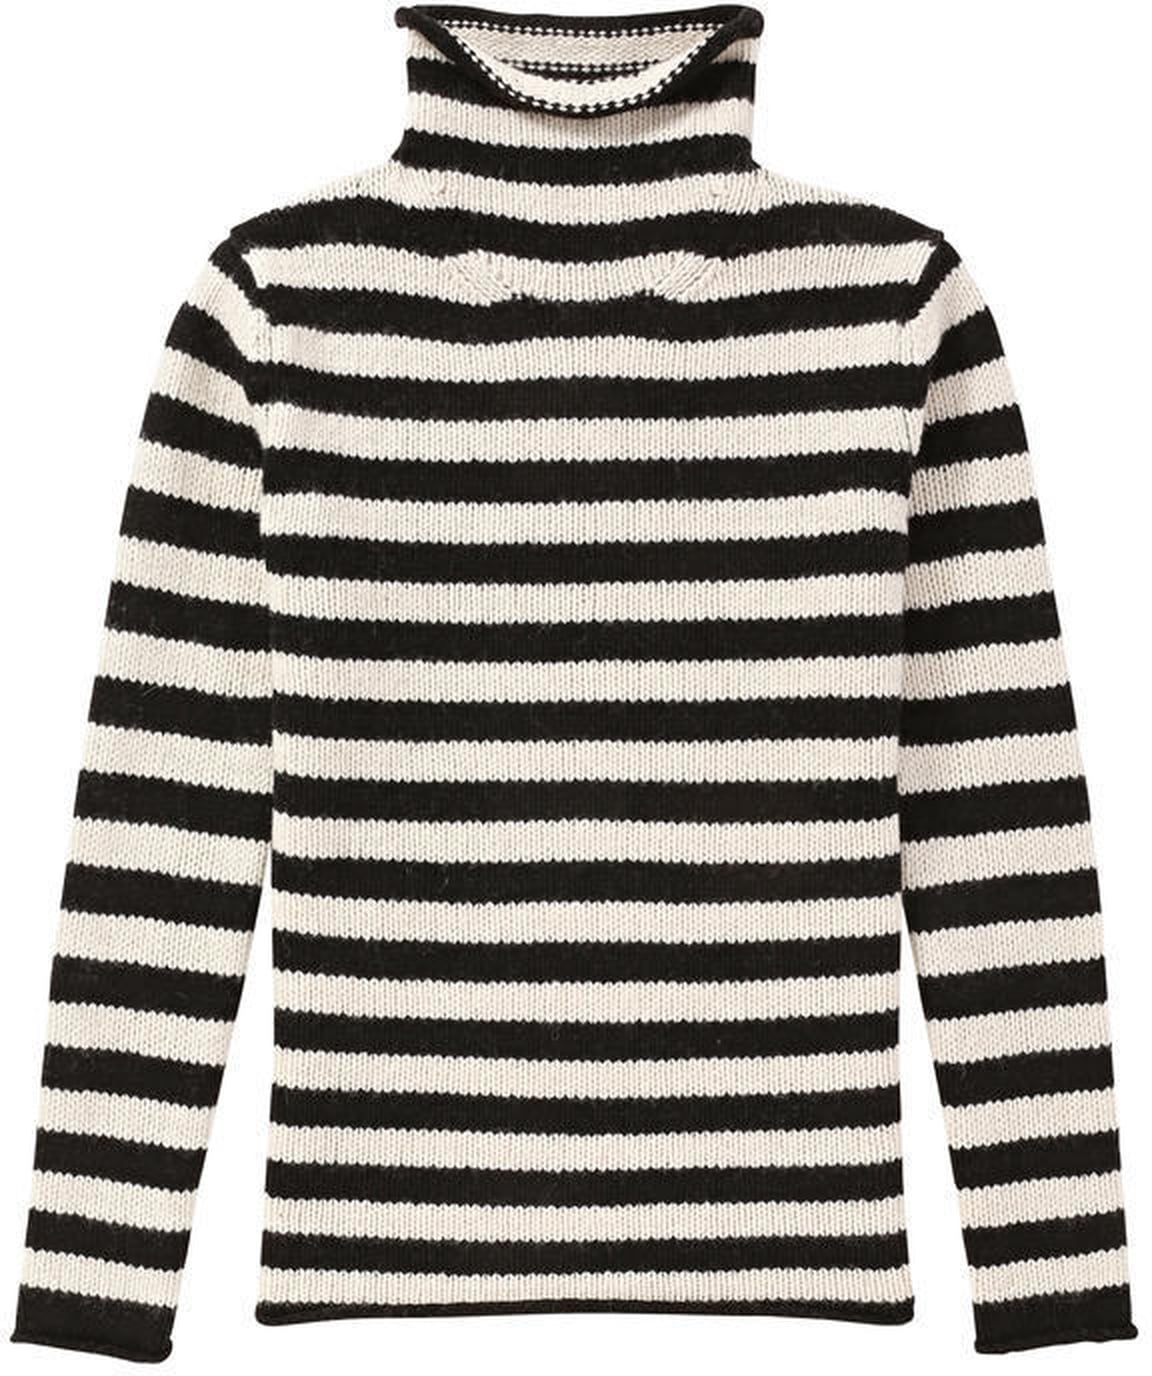 Olivia Palermo Dabs Wearing Striped Sweater | POPSUGAR Fashion